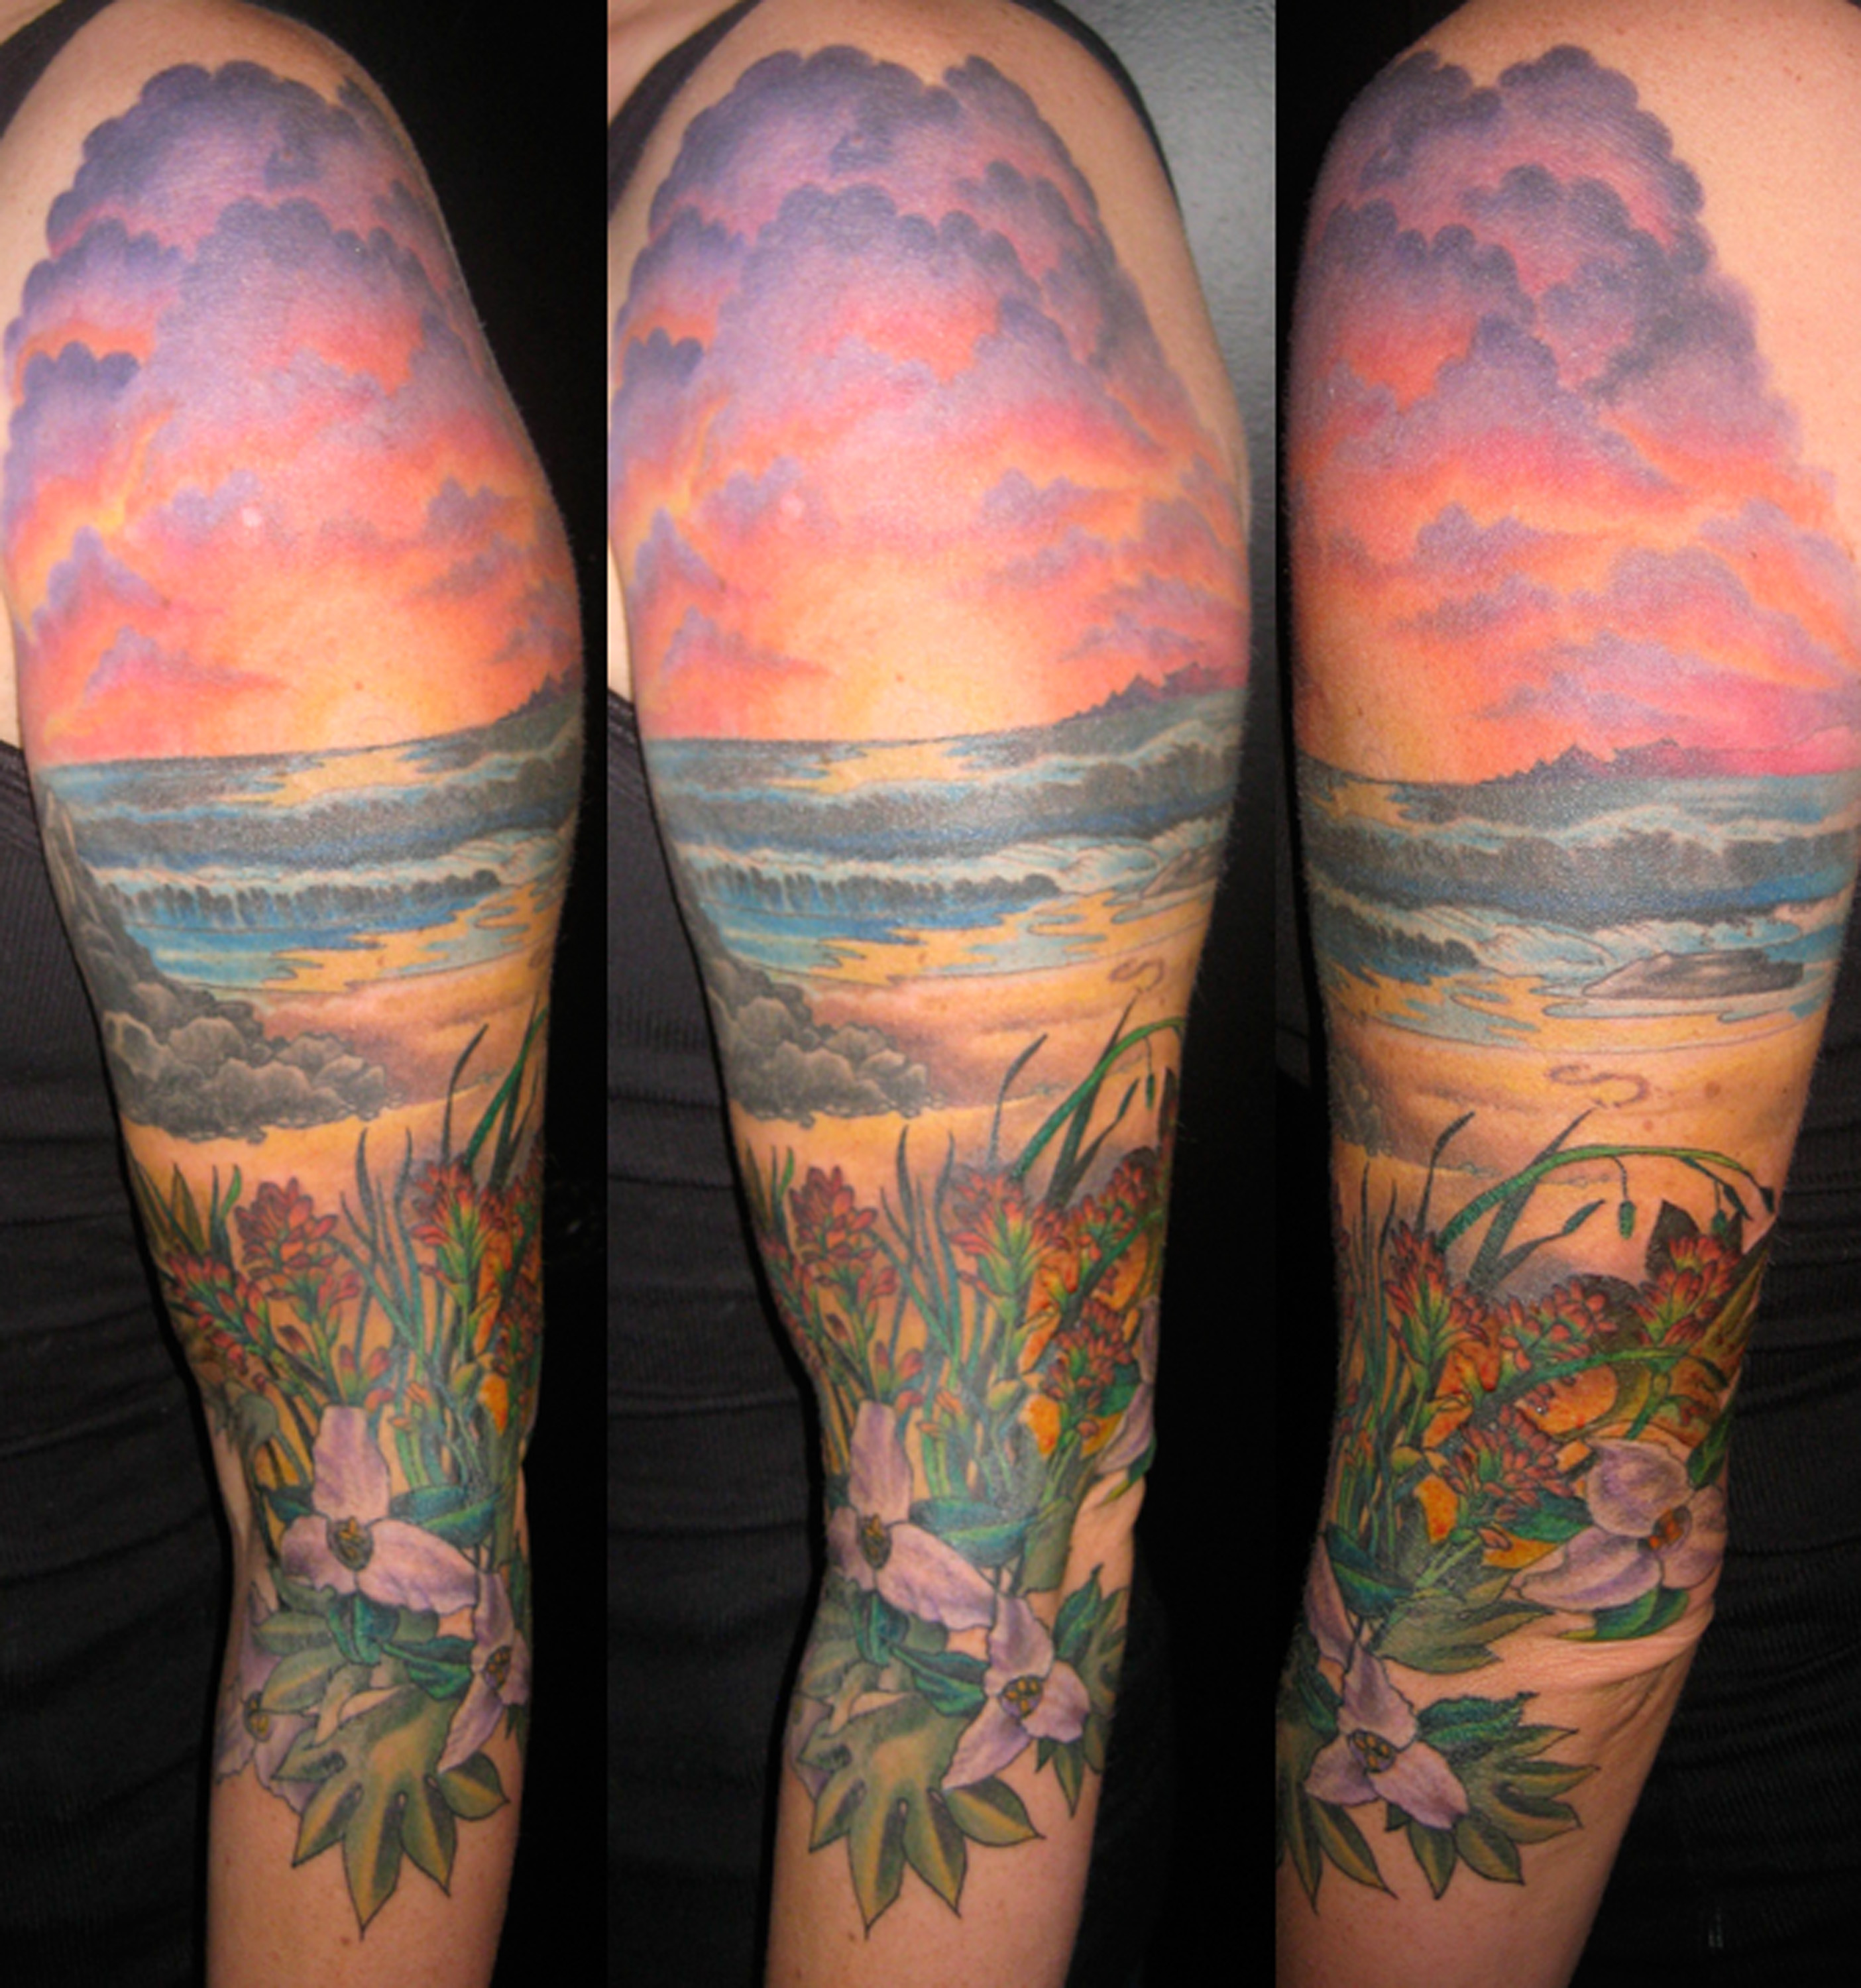 Sunset on the beach tattoo - | TattooMagz › Tattoo Designs / Ink Works